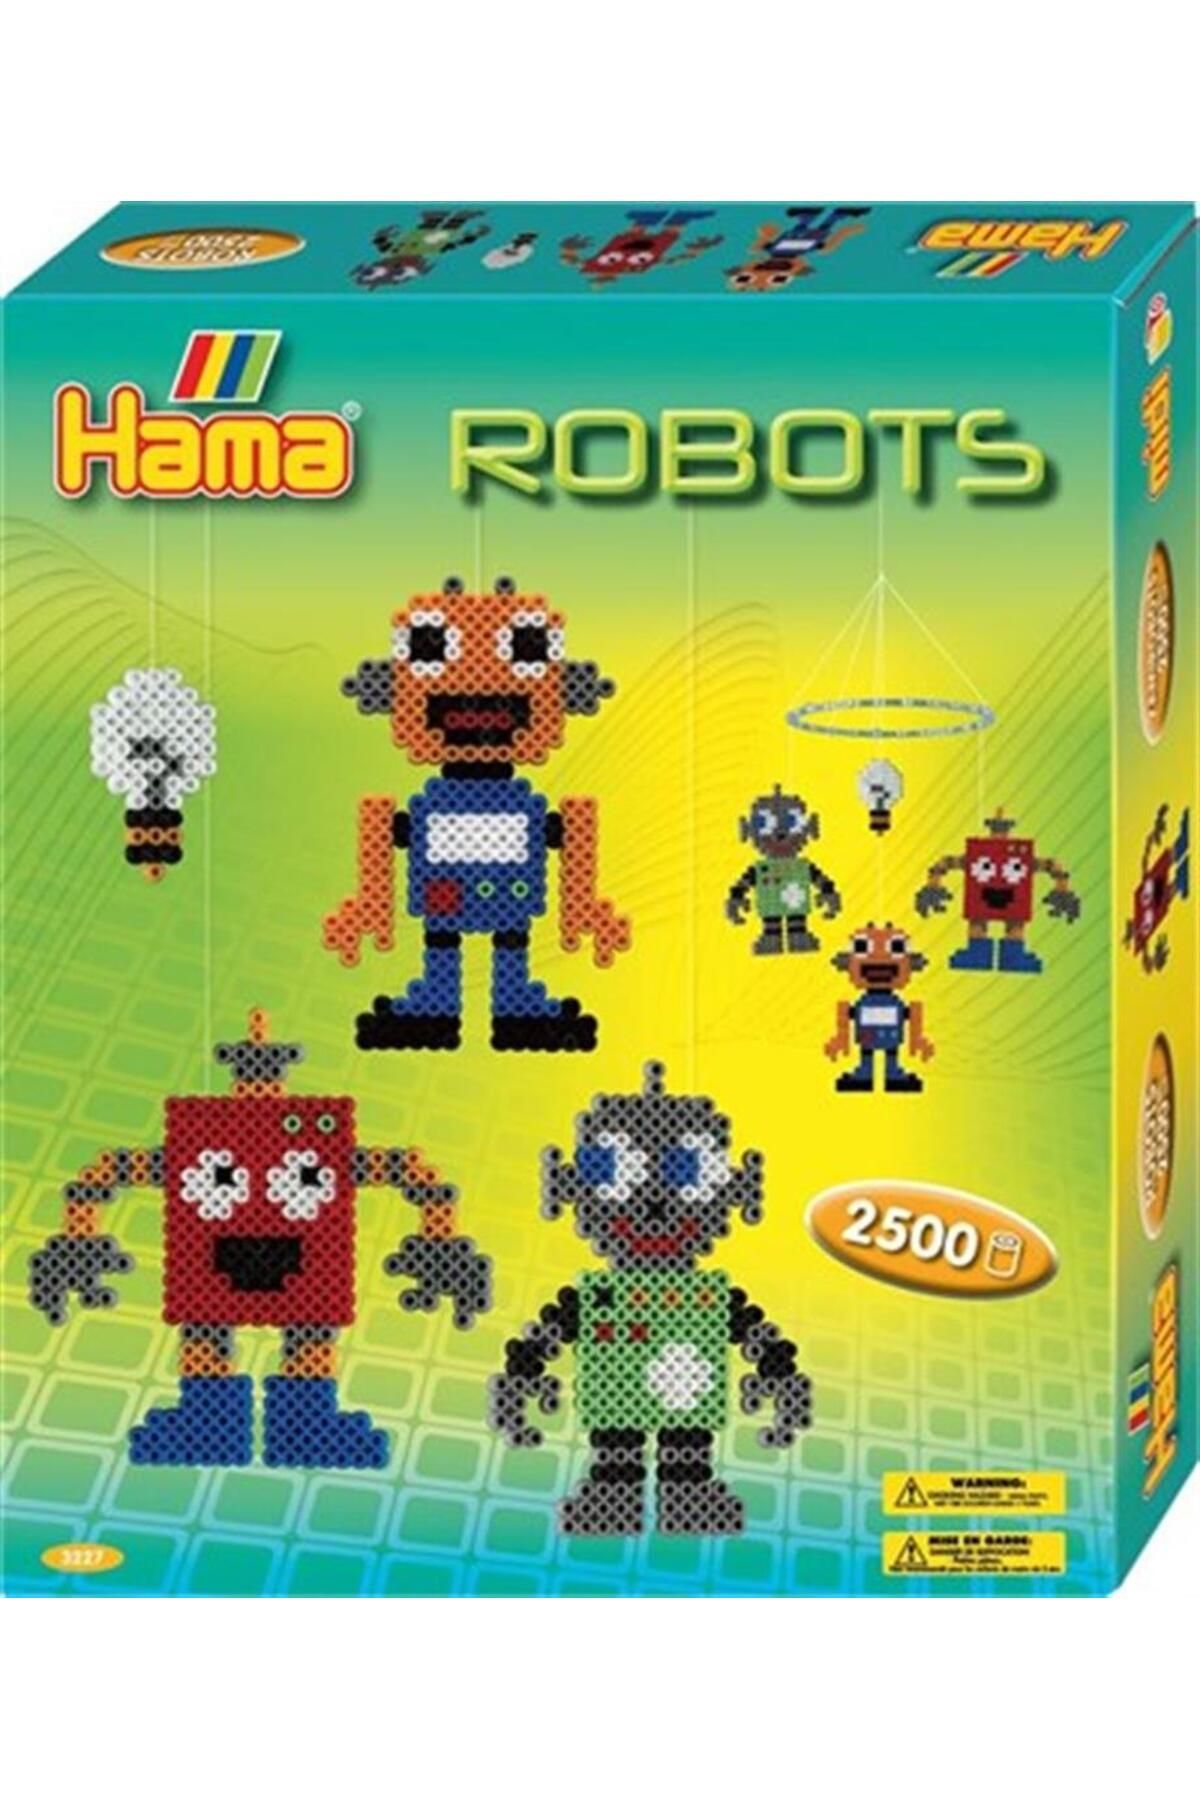 Hama Midi Boncuk Kutu Set - Robotlar Askıda2500